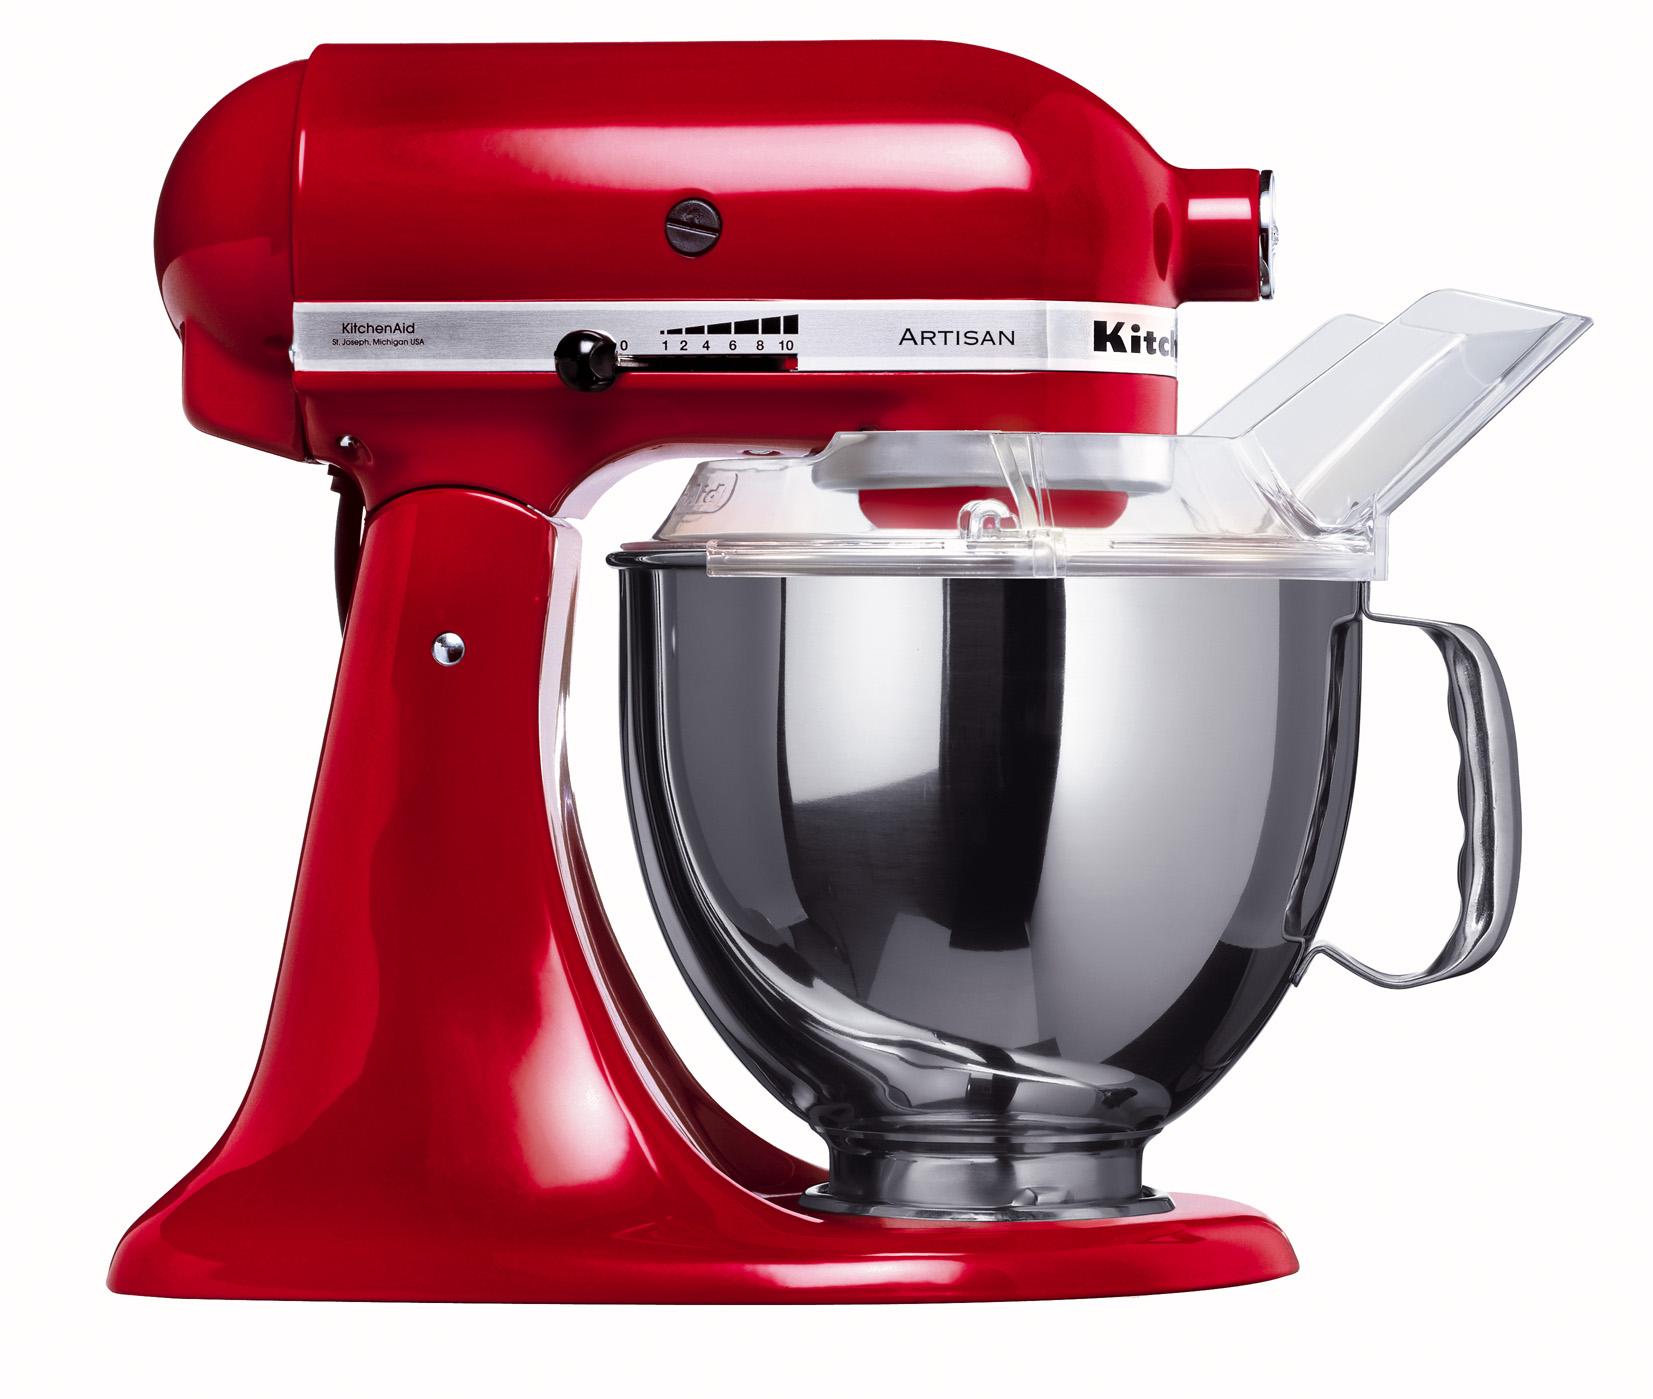 Foto KitchenAid Robot de Cocina Artisan rojo (H.Nr.: 5KSM150PSEER) foto 52995